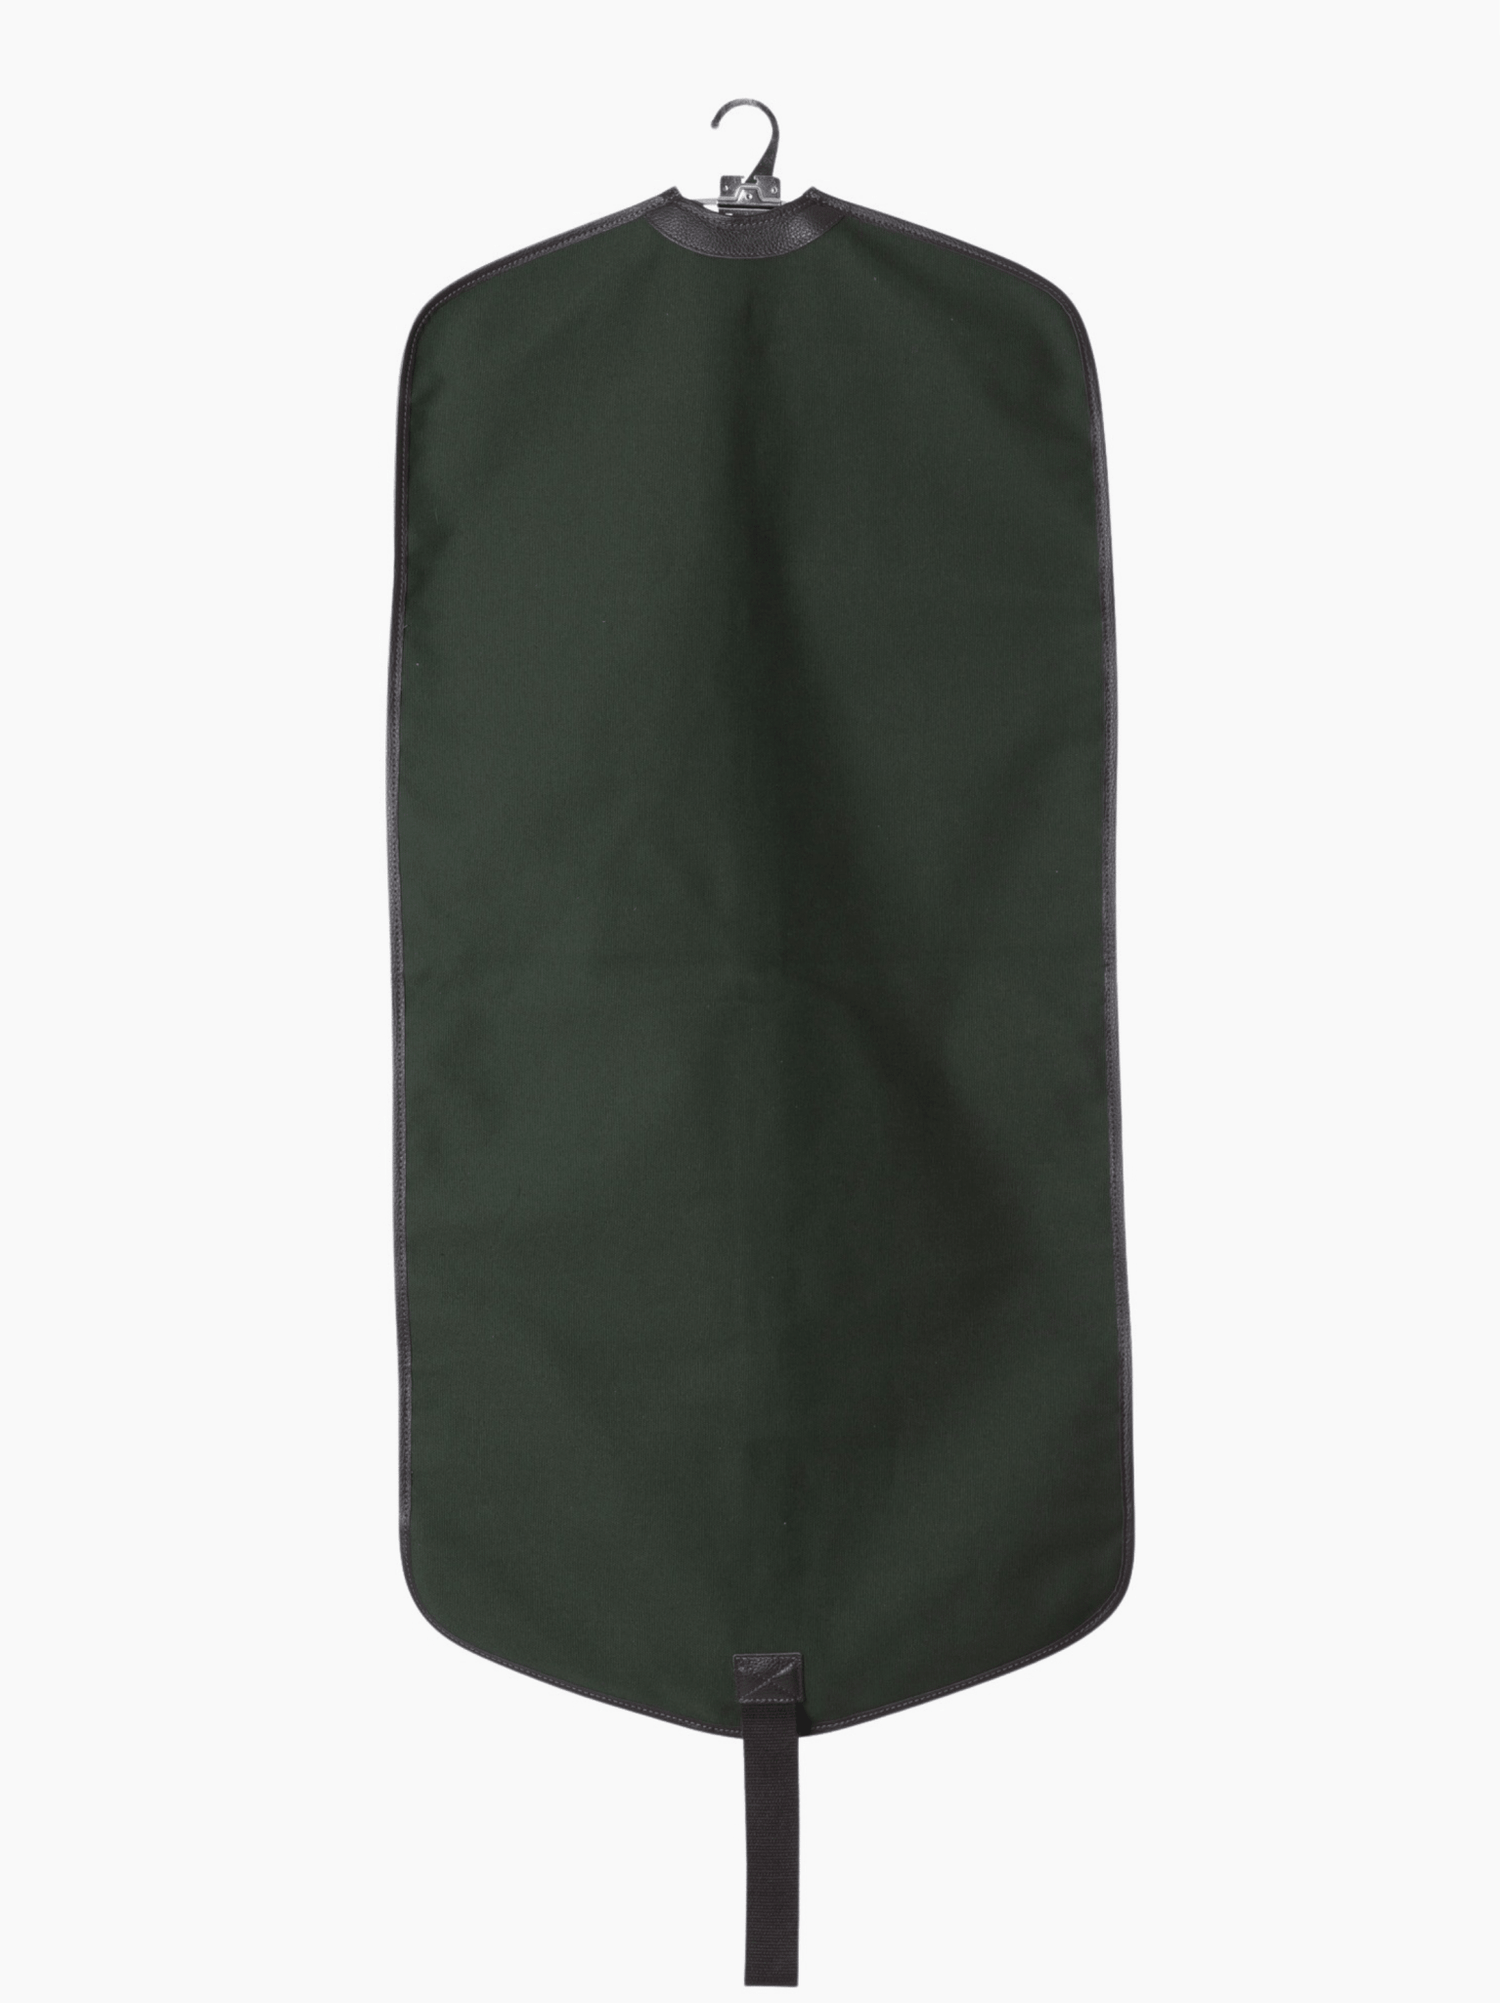 Suit bag in Green